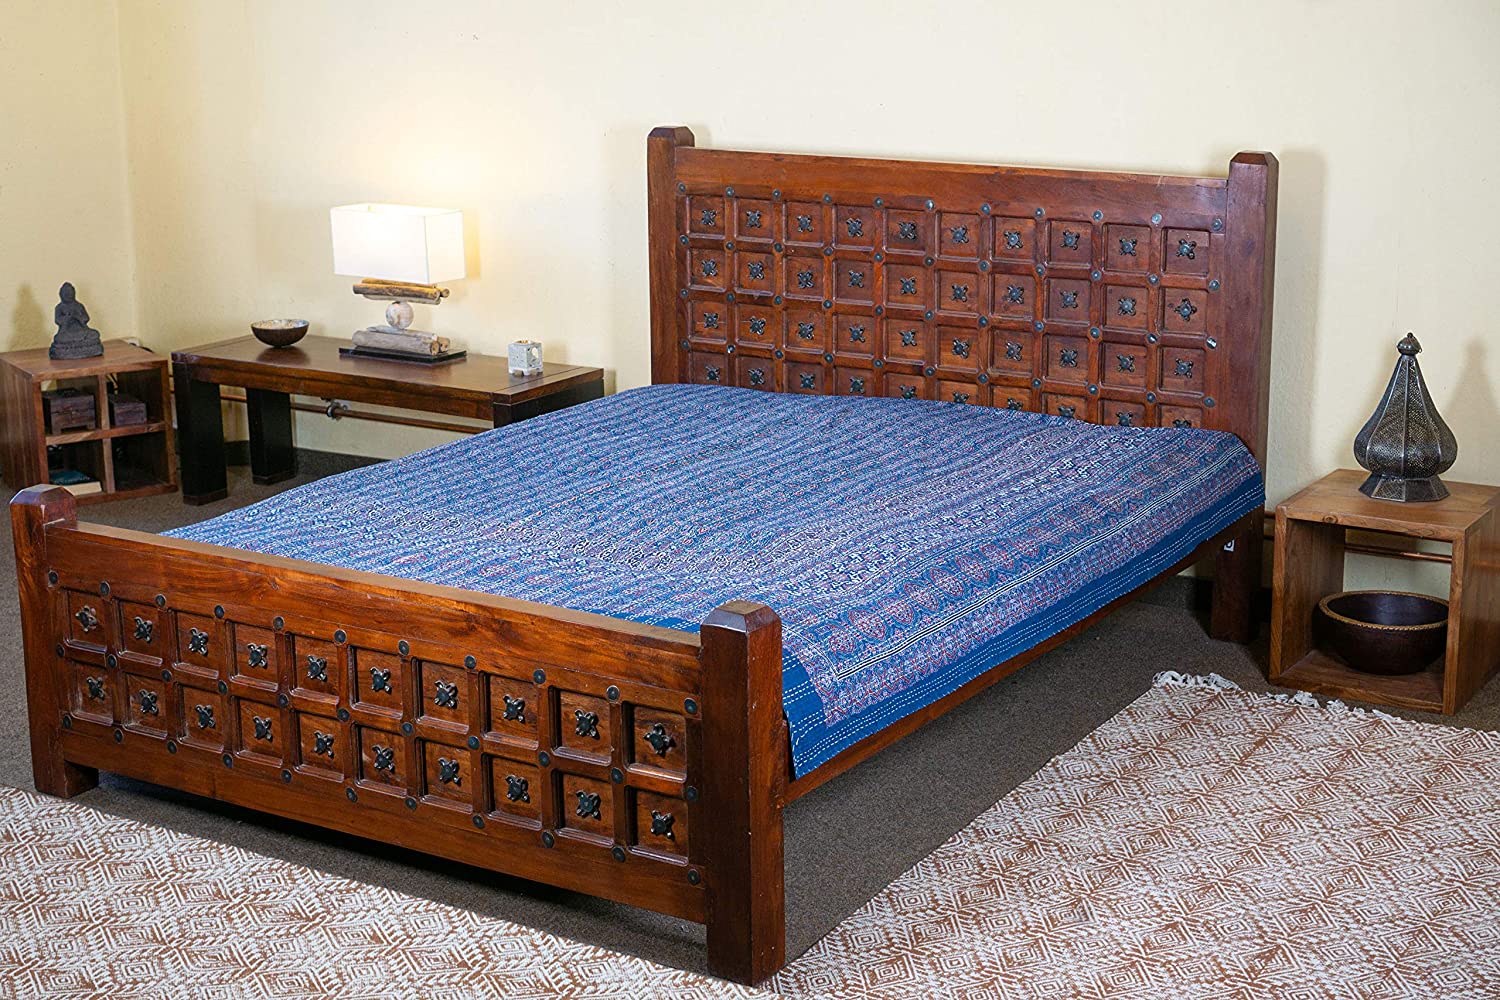 Guru-Shop GURU SHOP Quilt, Quilt, Bedspread, Bed Throw, Embroidered Cloth, Indian Bed Throw, Bedspread - Pattern 24, Blue, Cotton, 275 x 225 cm, Quilts & Quilts